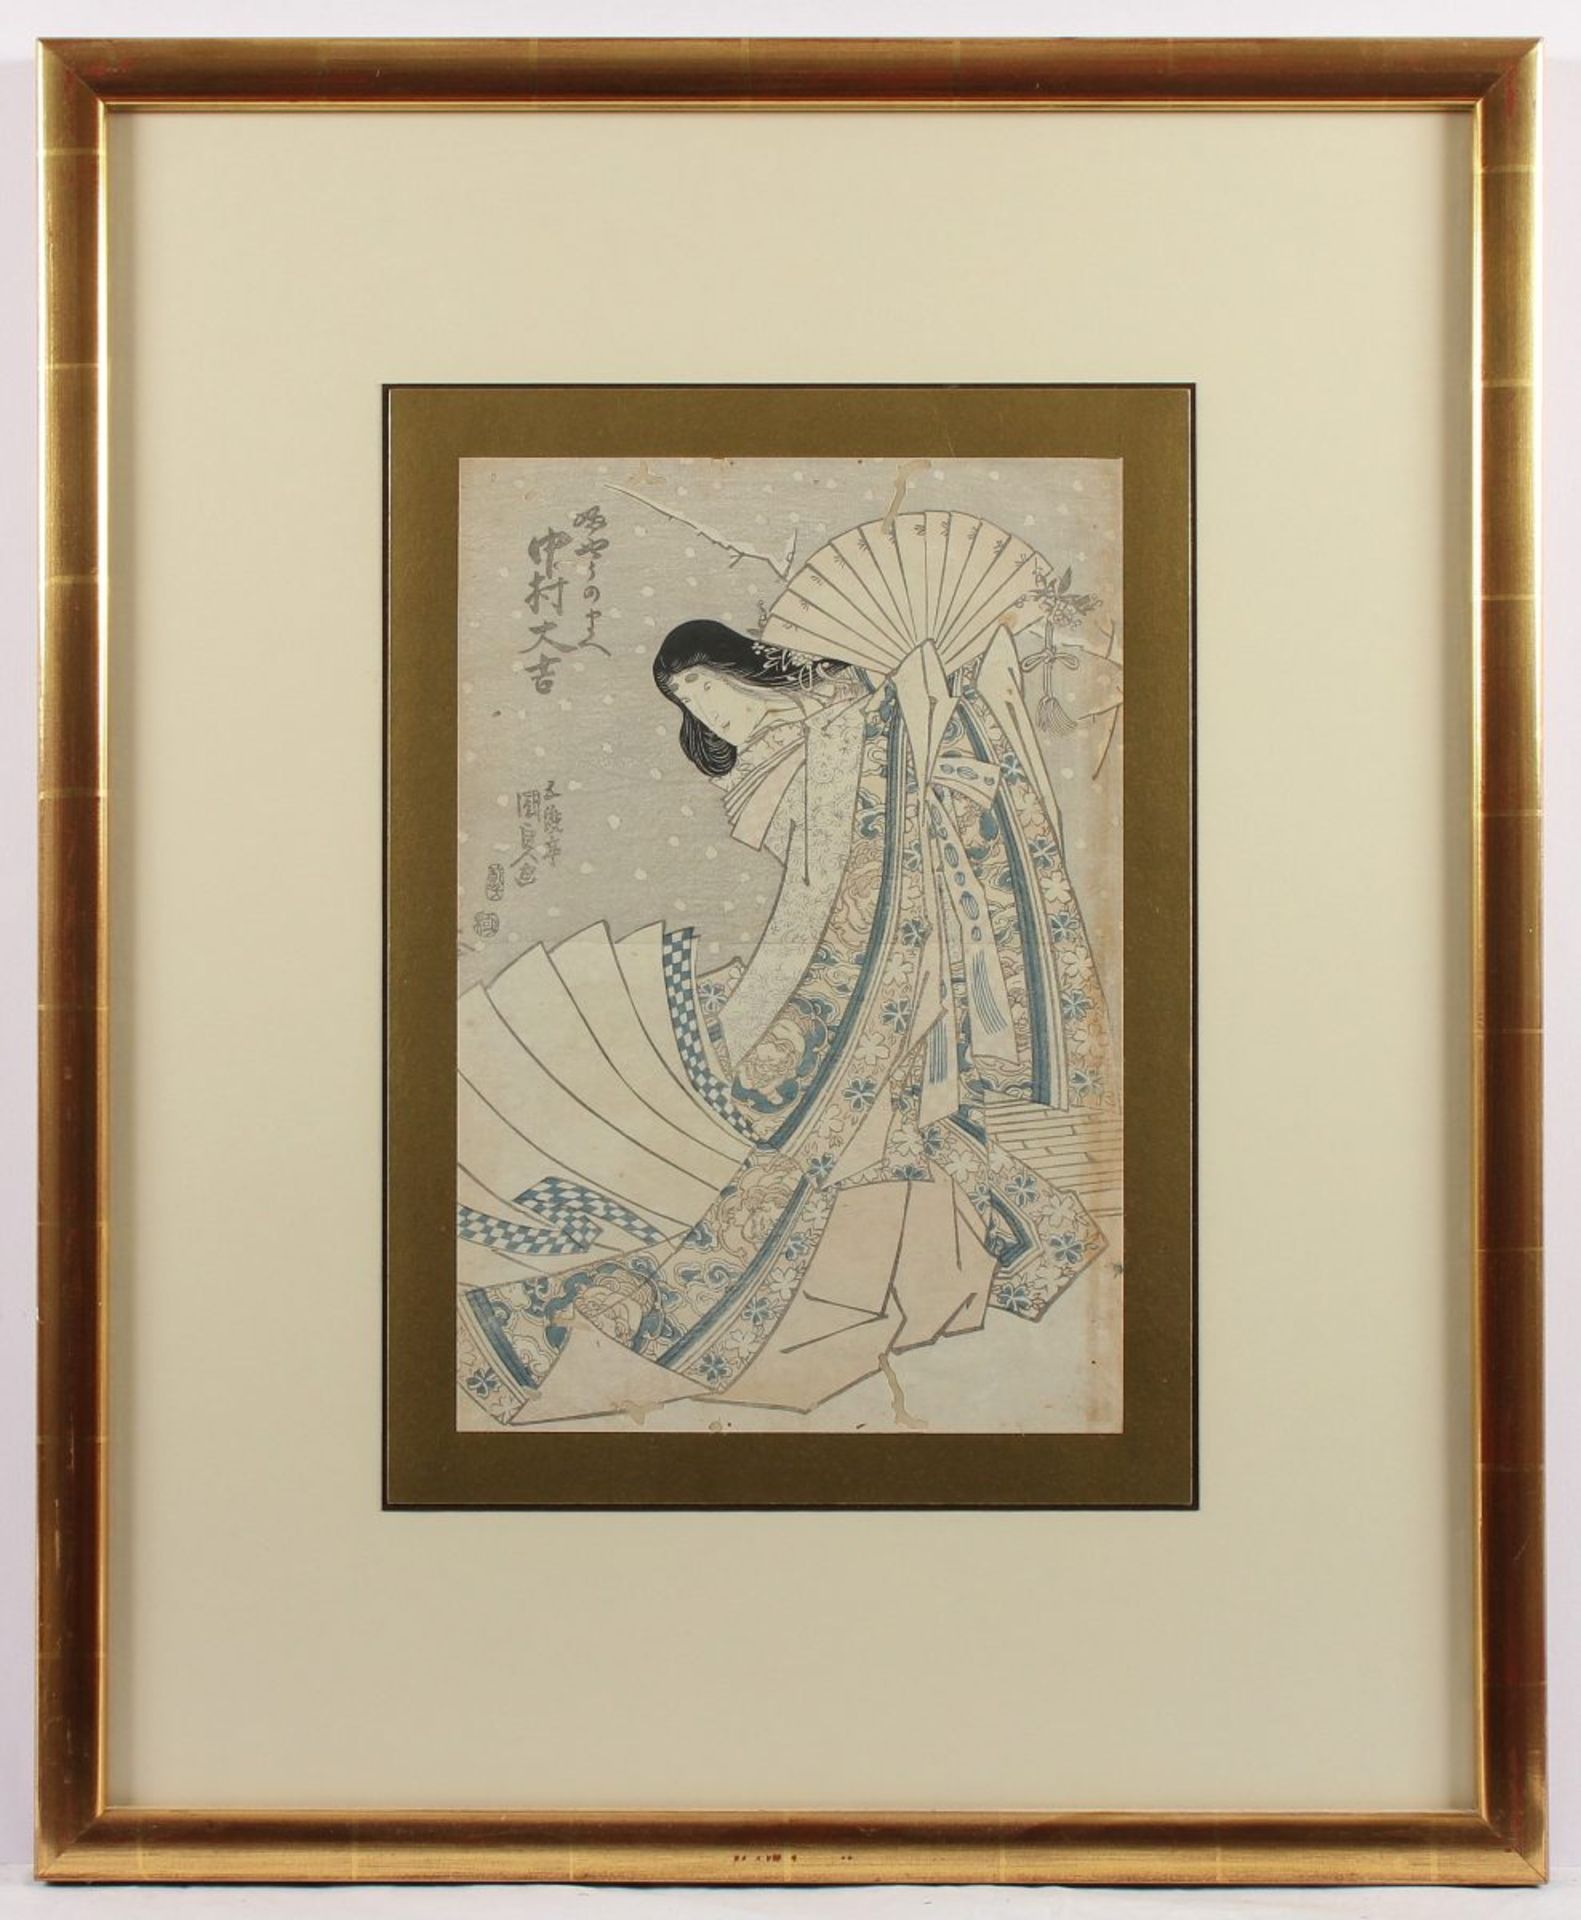 FARBHOLZSCHNITT, KUNISADA I (1786-1865), "Schauspieler", unter Glas gerahmt, JAPAN - Image 2 of 2